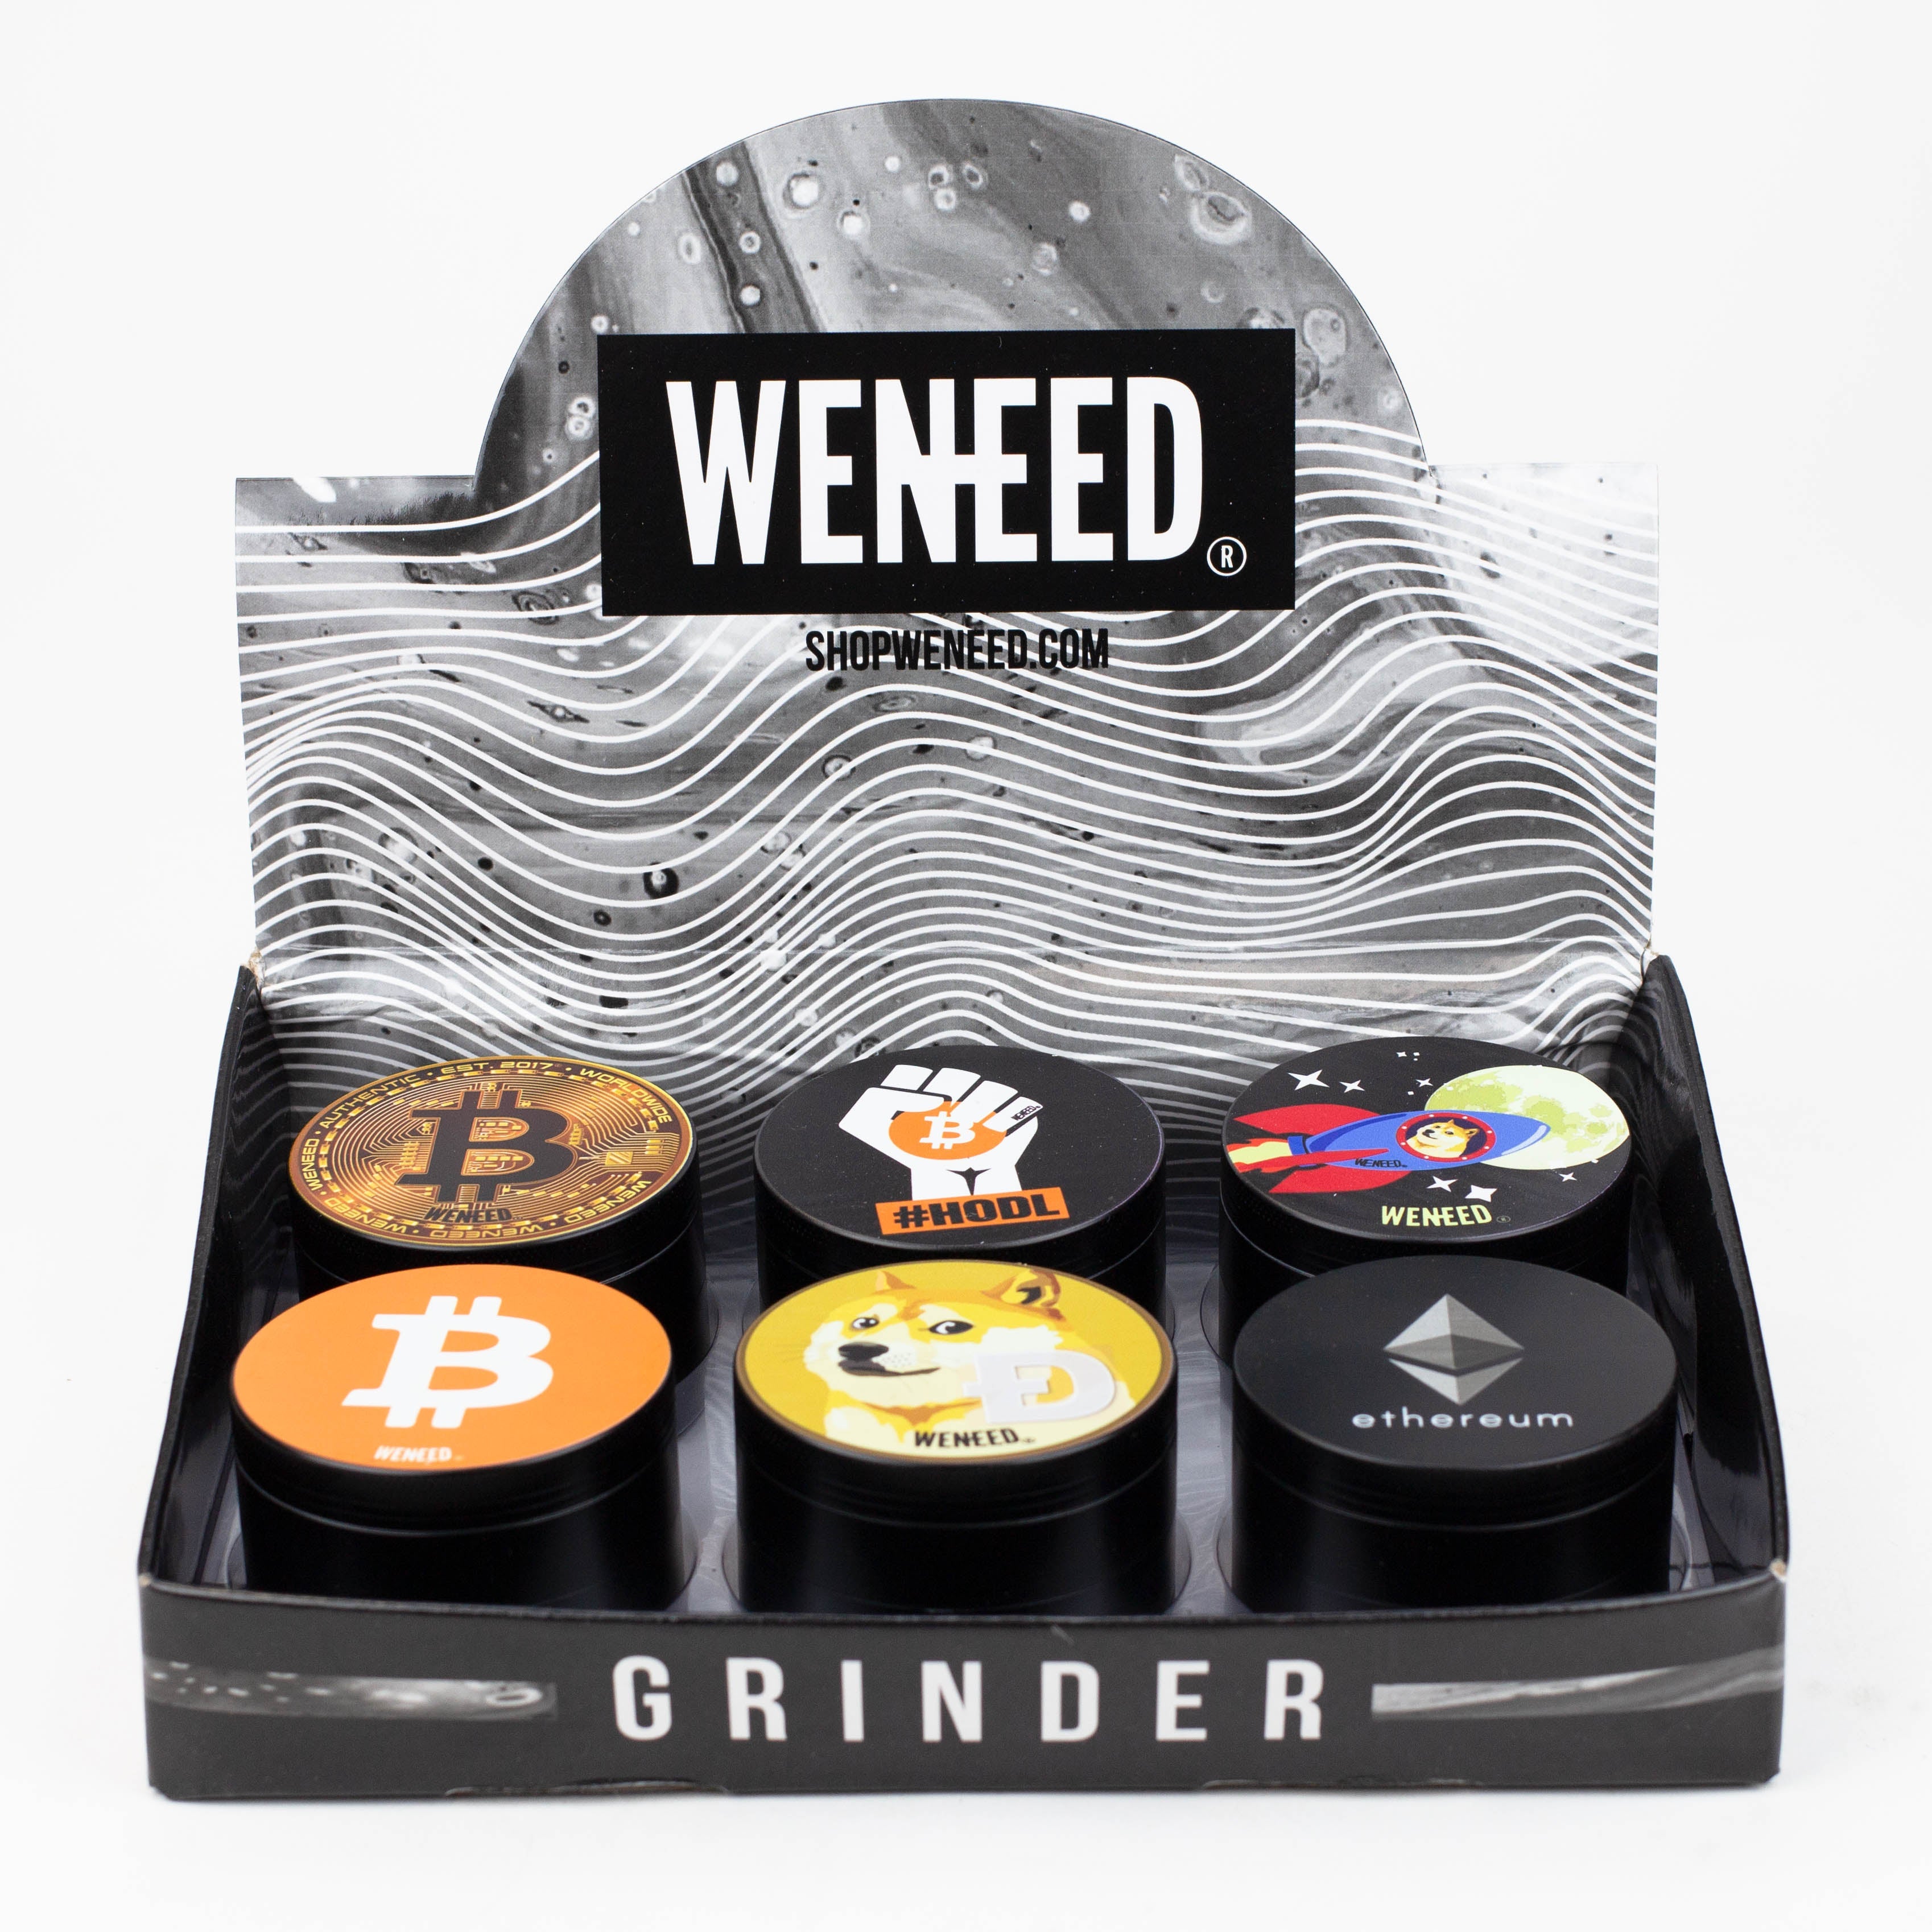 WENEED®-Crypto Grinder 4pts 6pack_0